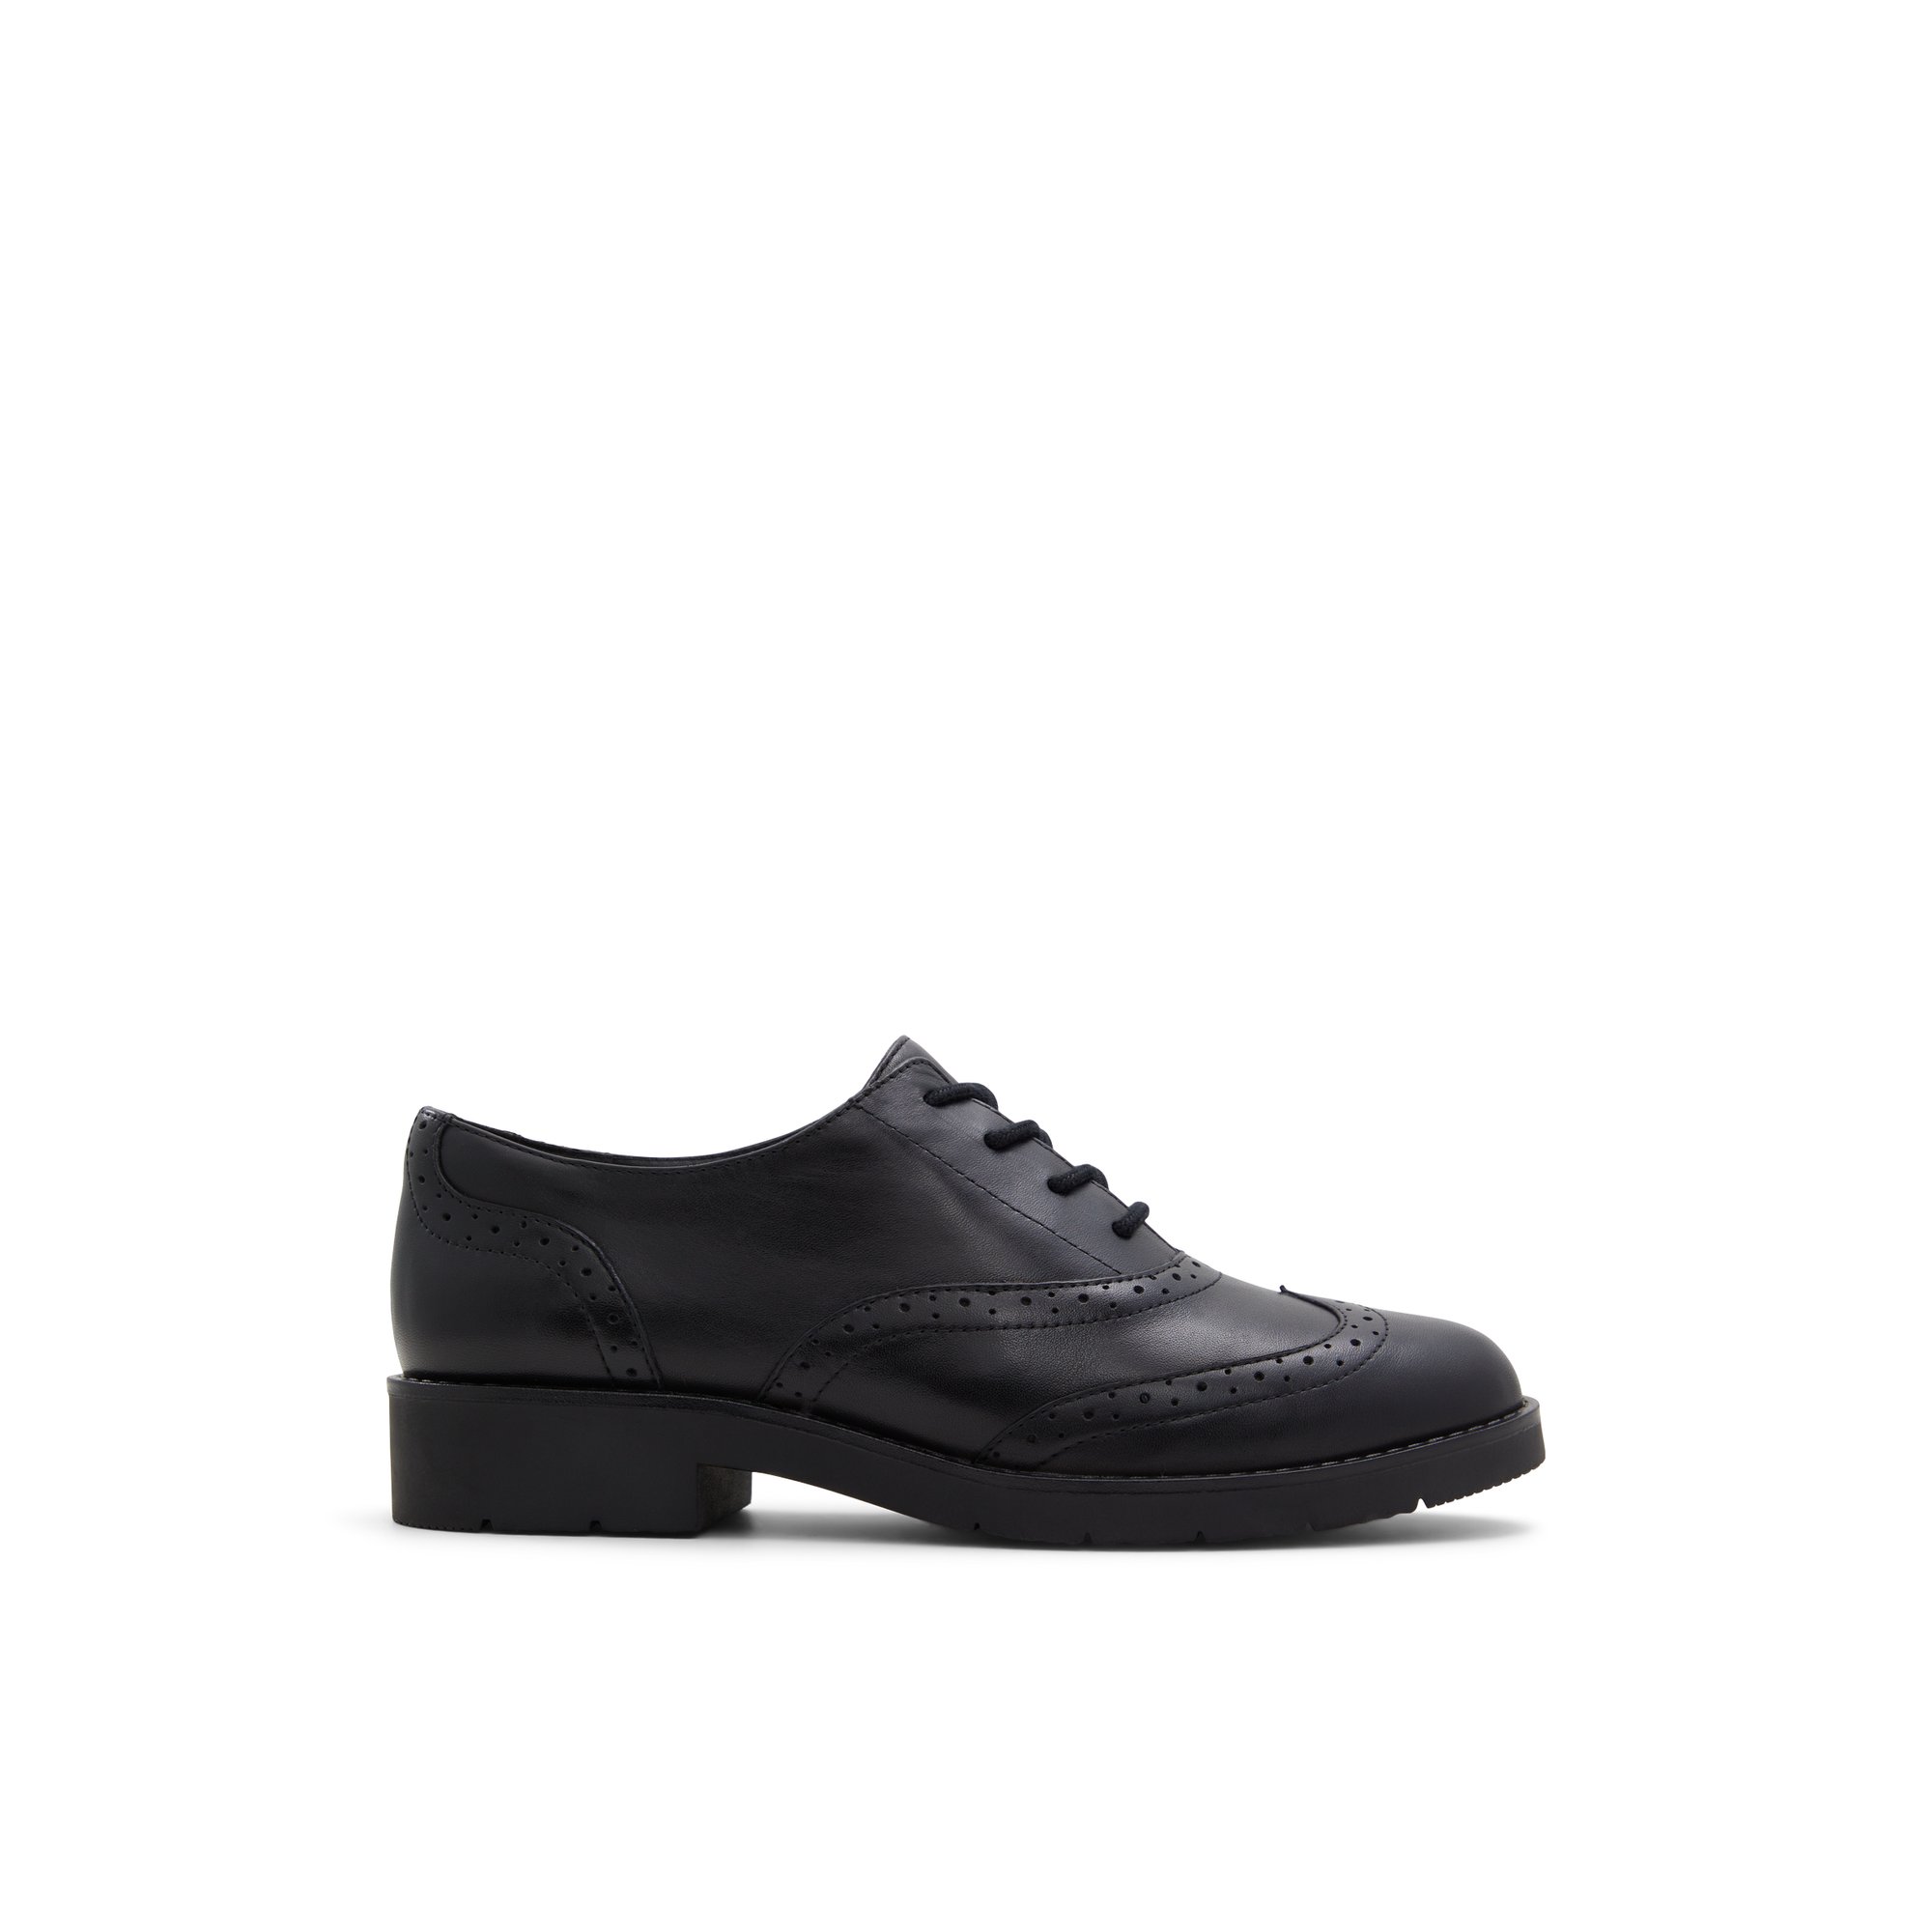 ALDO Cerdaflex - Women's Loafers - Black